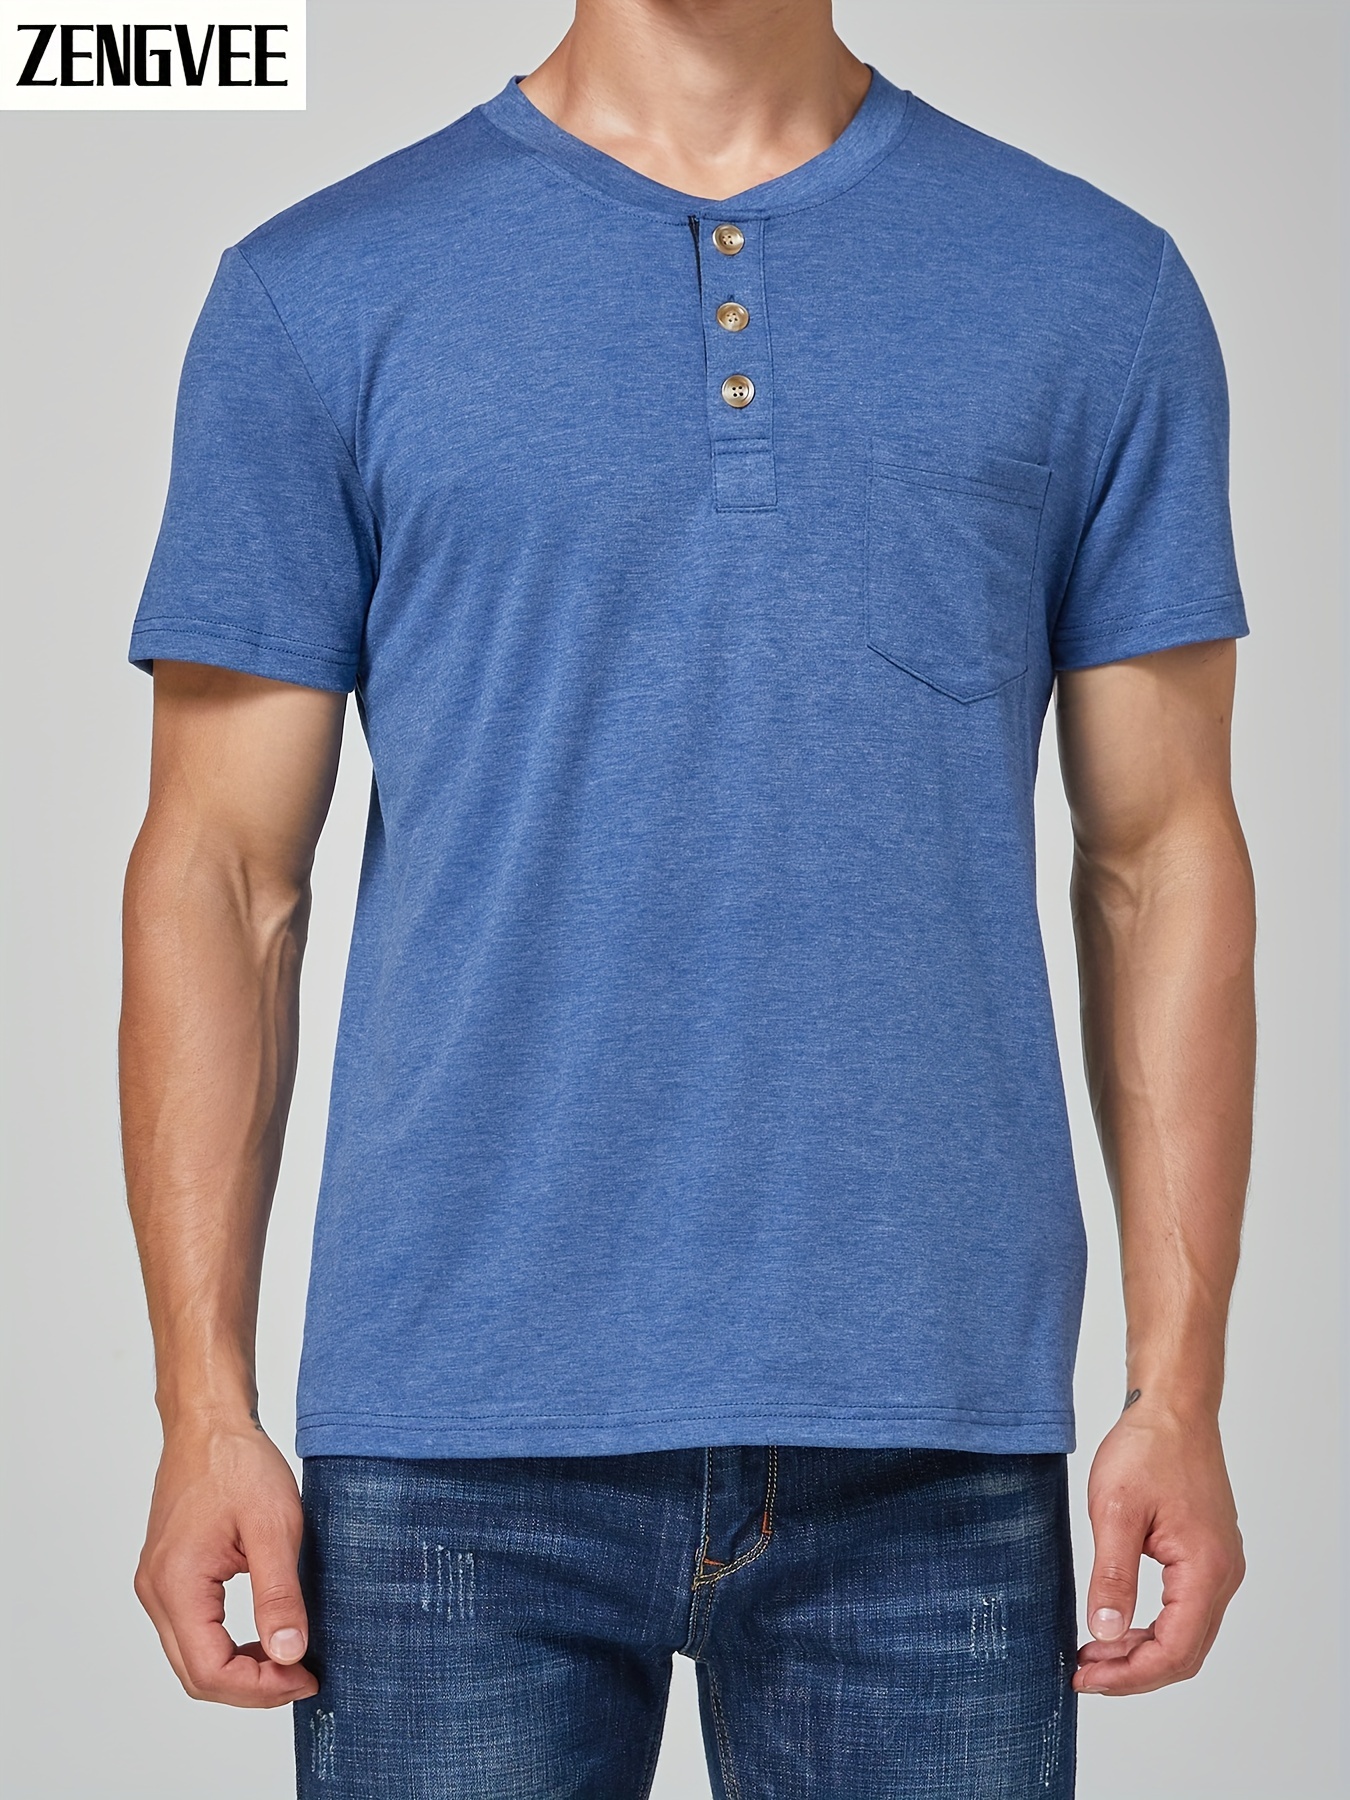 sky-blue Polo basic t-shirt short sleeves solid shirt